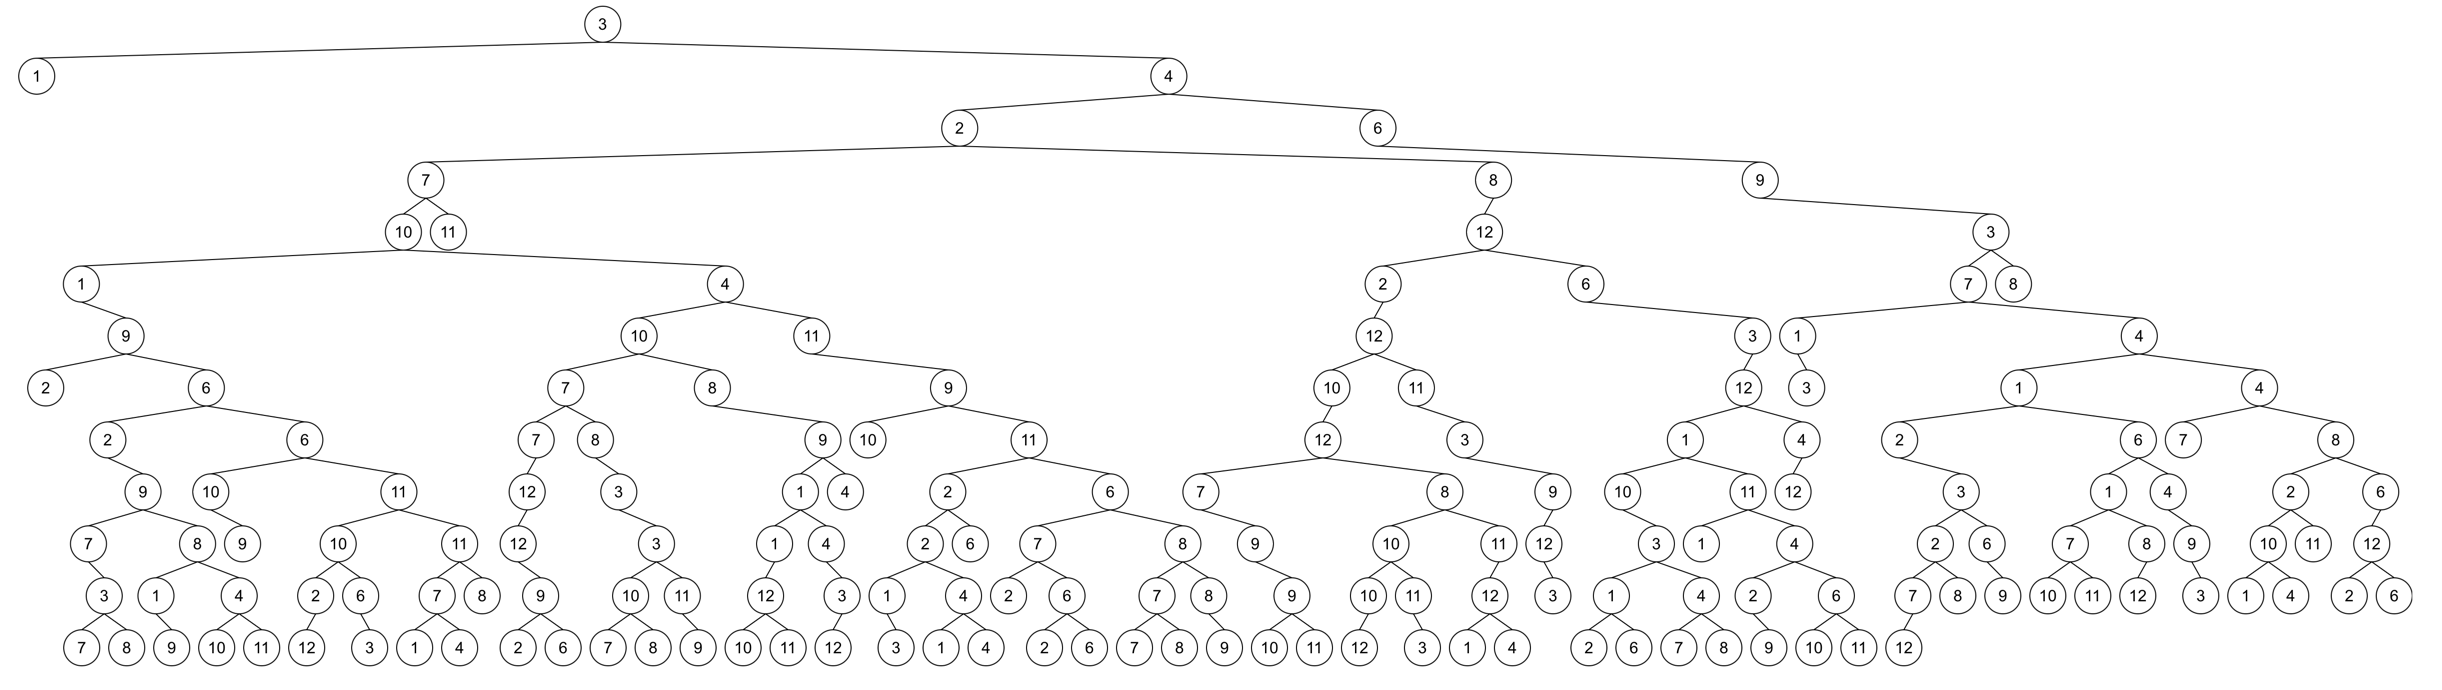 LeetCode Tree Visualizer large tree